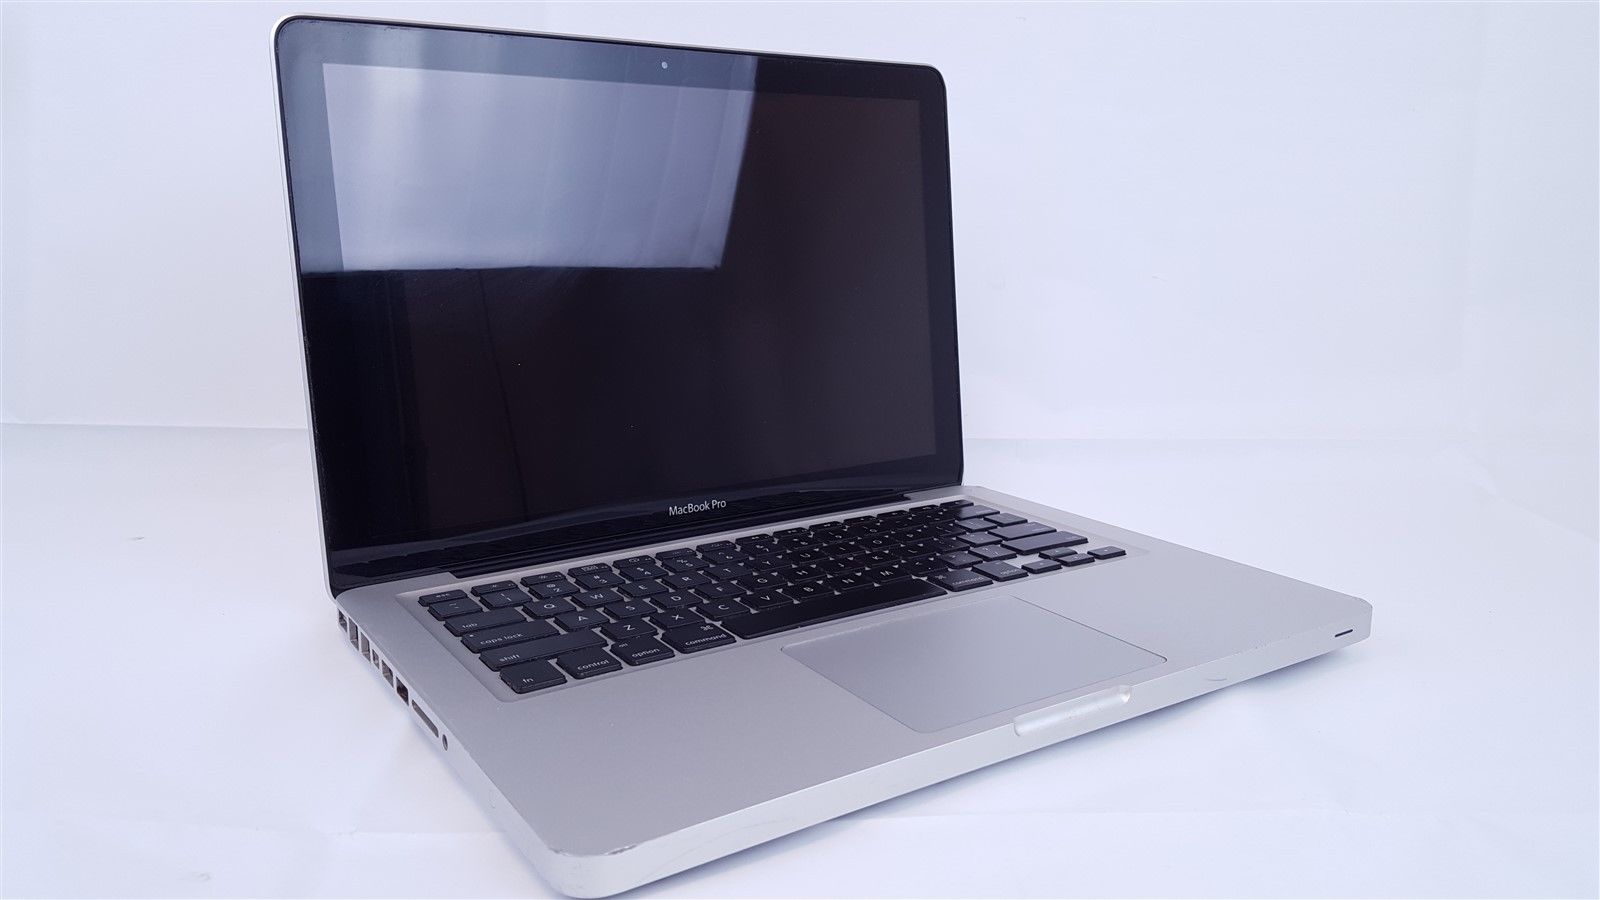 Apple Macbook Pro A1278 13.3" 2.4GHz 4Gb RAM 320GB Mid 2010 MC374LL/A Laptop